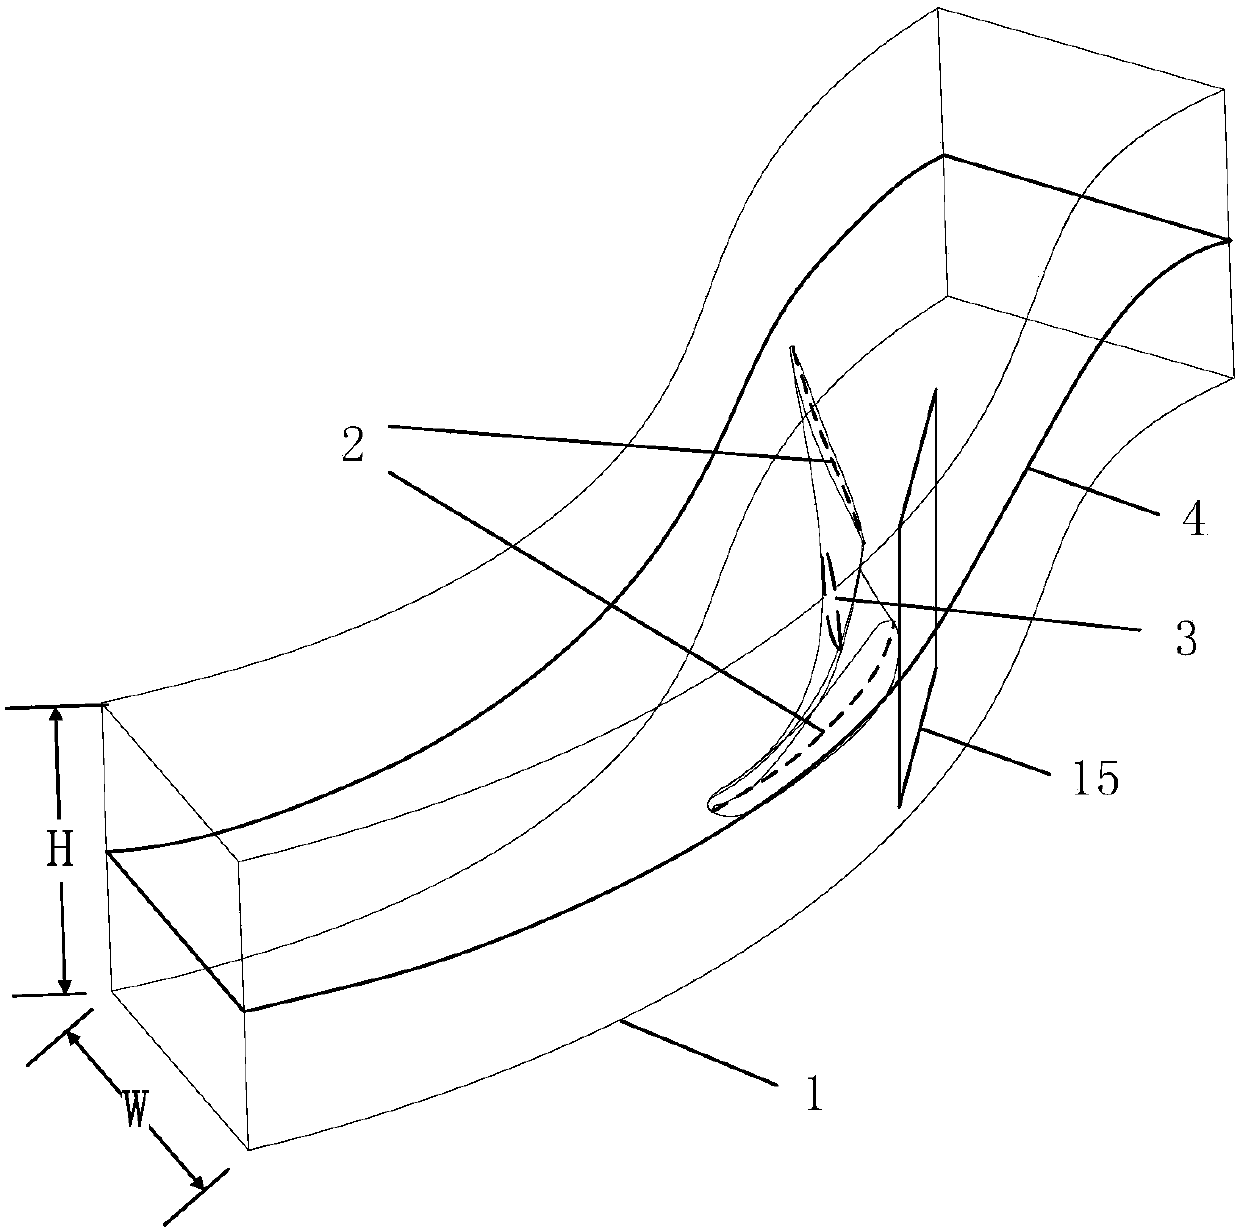 Design method of impeller blade drag reduction micro-texture